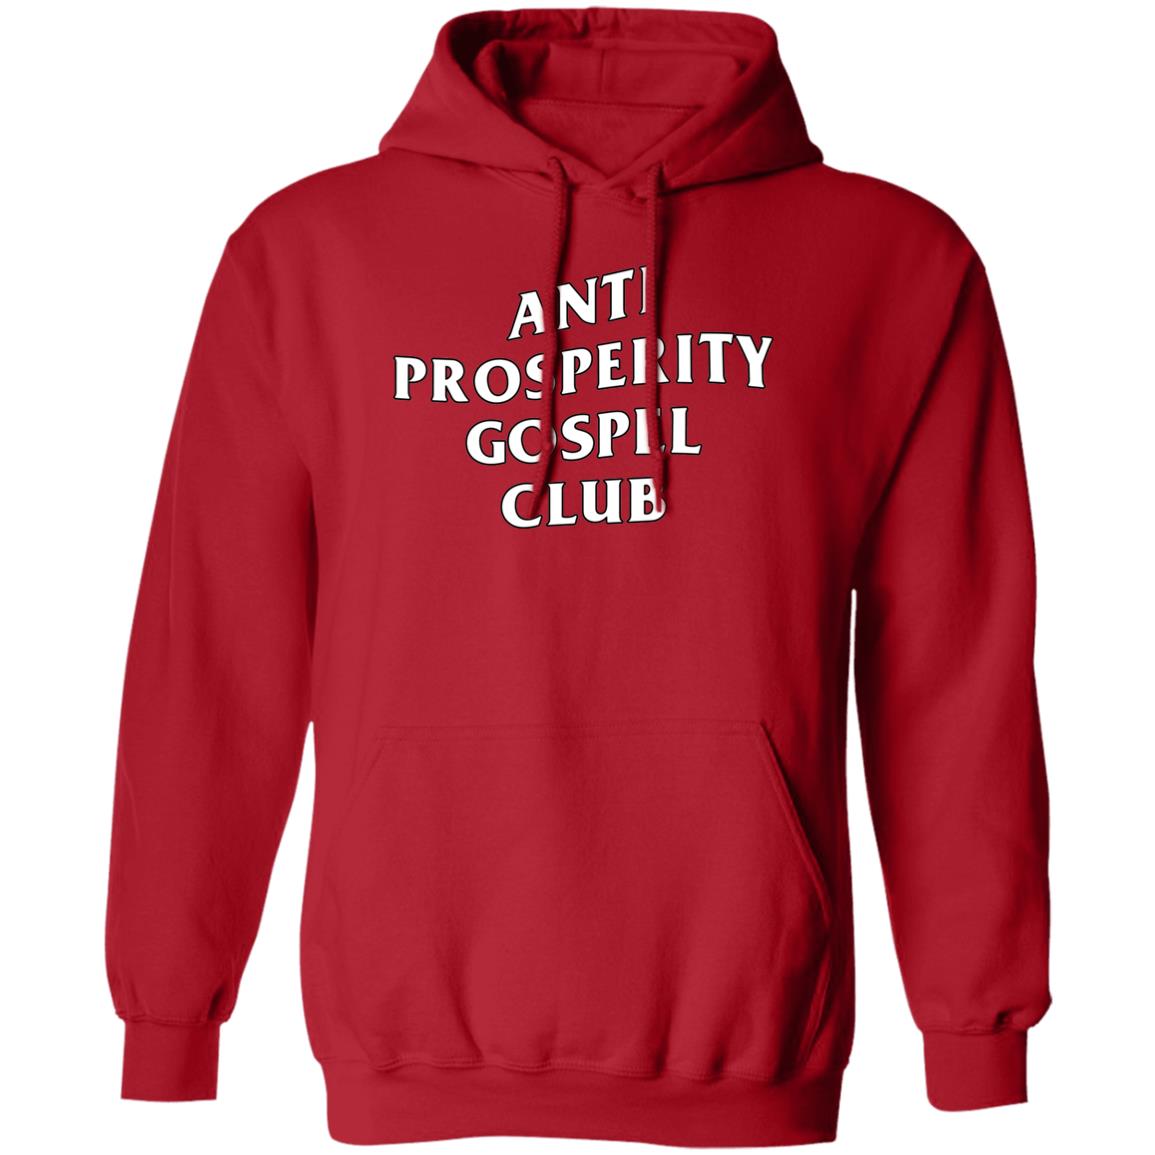 Anti Prosperity Gospel Club (Unisex Hoodie)